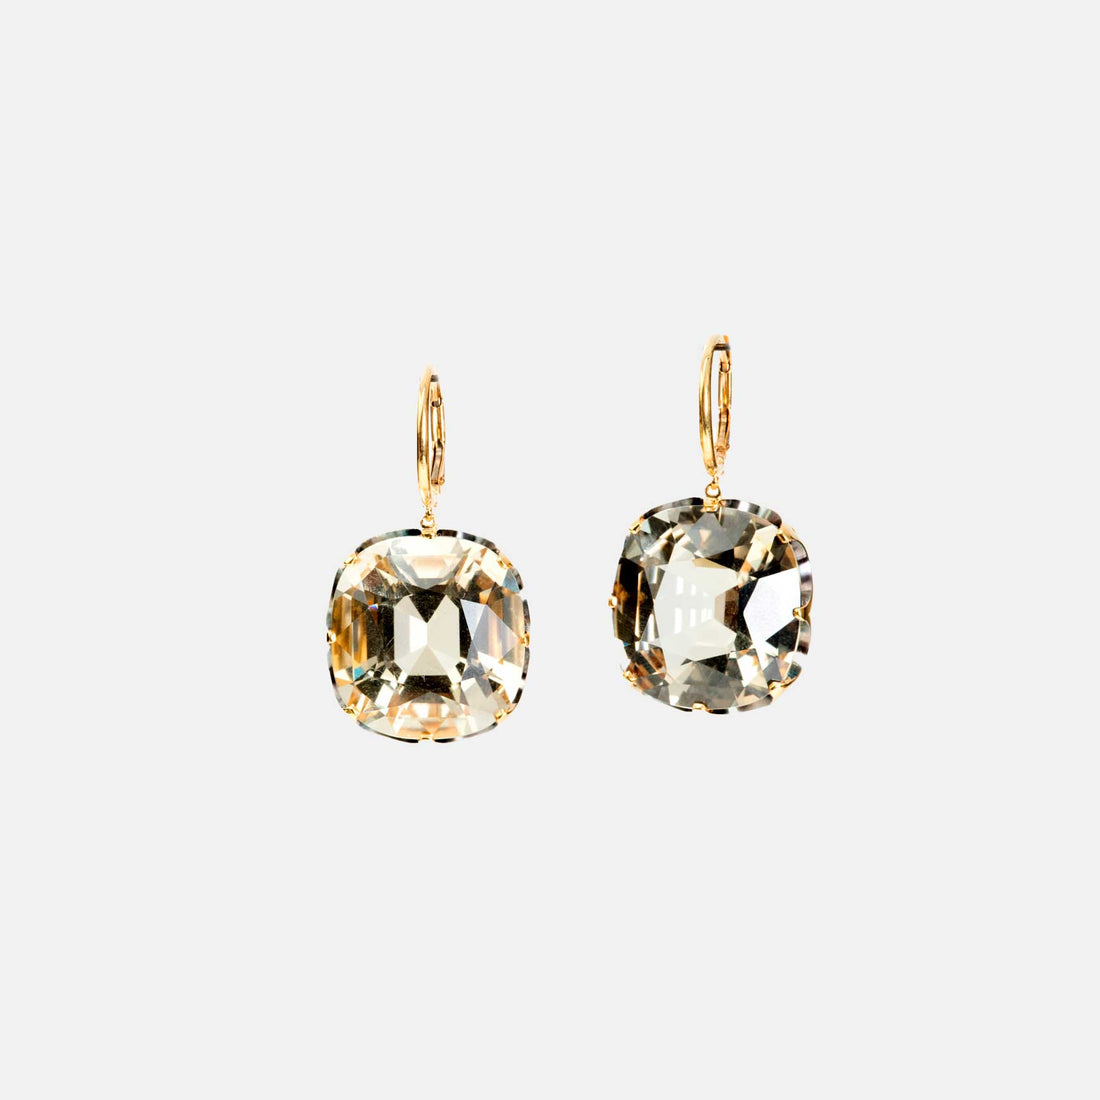 Pale yellow quartz earrings